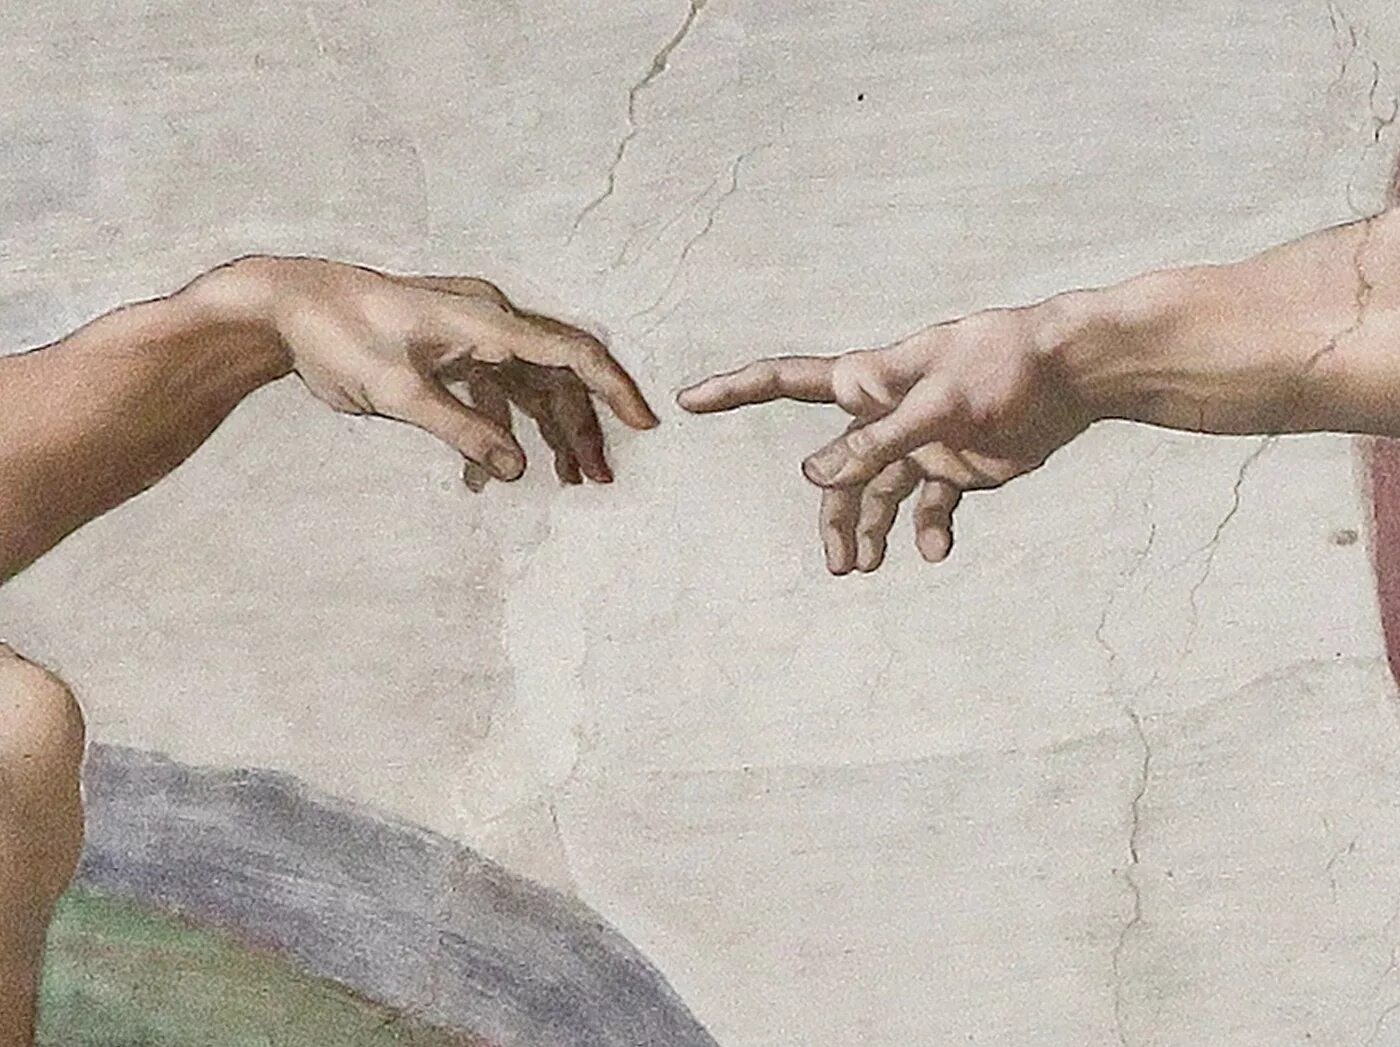 Сильно тянет руки. Микеланджело Сотворение Адама. Сотворение человека Микеланджело. Микеланджело Буонарроти, «Сотворение Адама» (1511-1512). Микеланджело Буонарроти фреска Сотворение Адама.